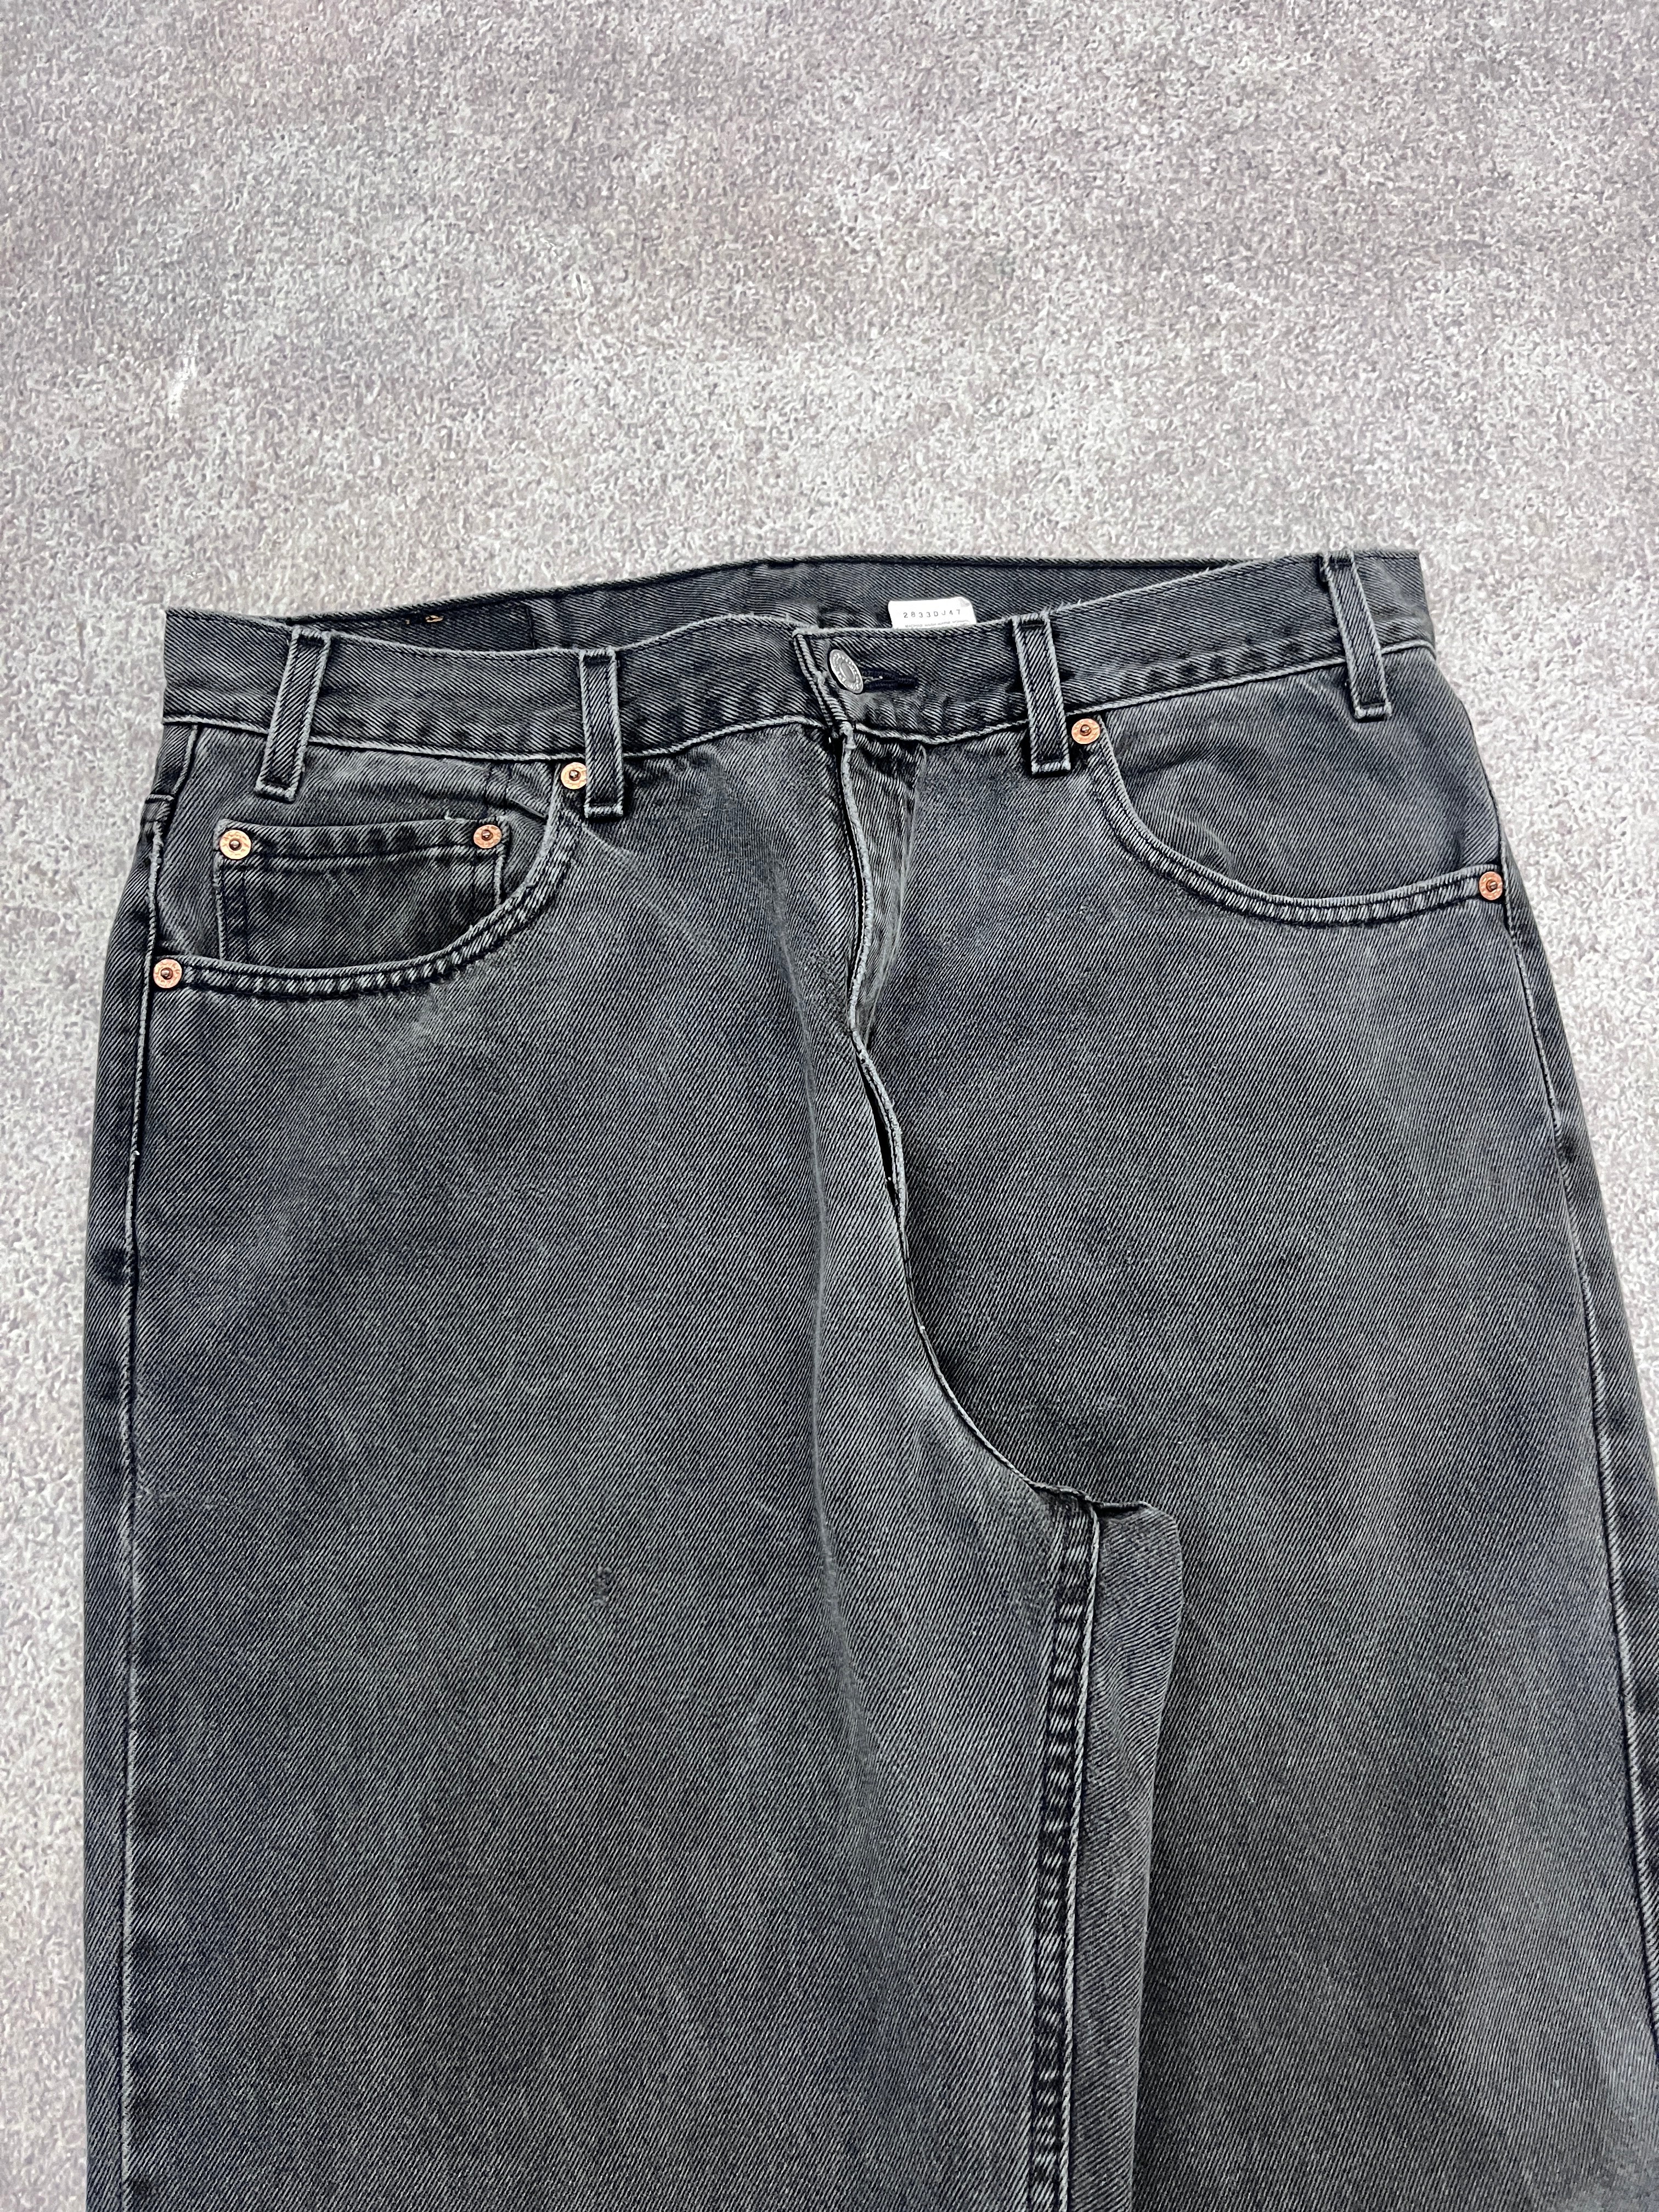 Vintage Levi Denim Jeans Grey // W36 L34 - RHAGHOUSE VINTAGE